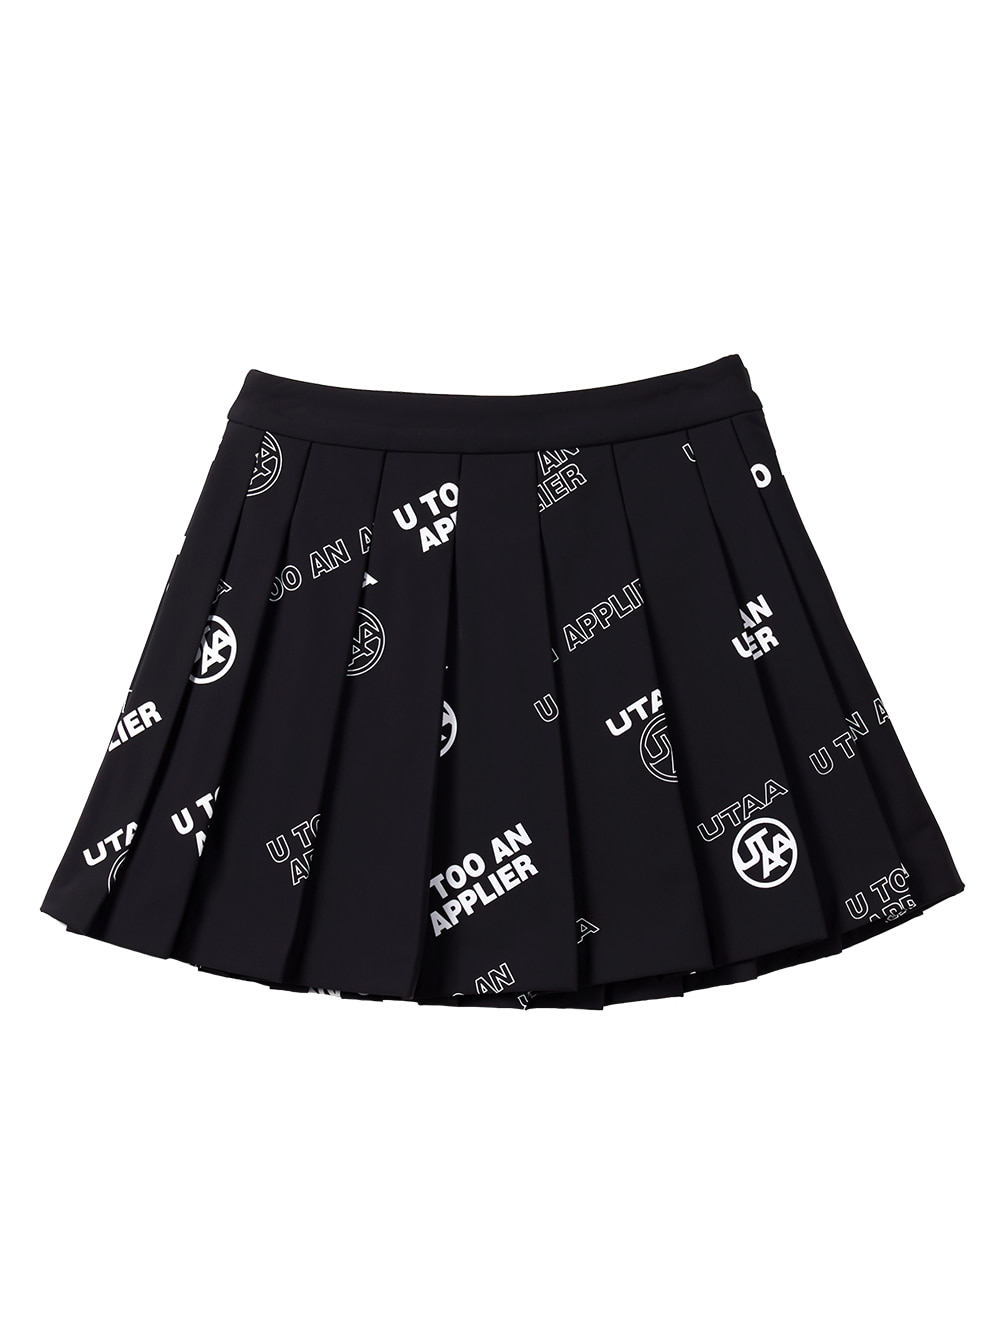 UTAA Messenger Pleats Skirt (UB1SKF150BK)